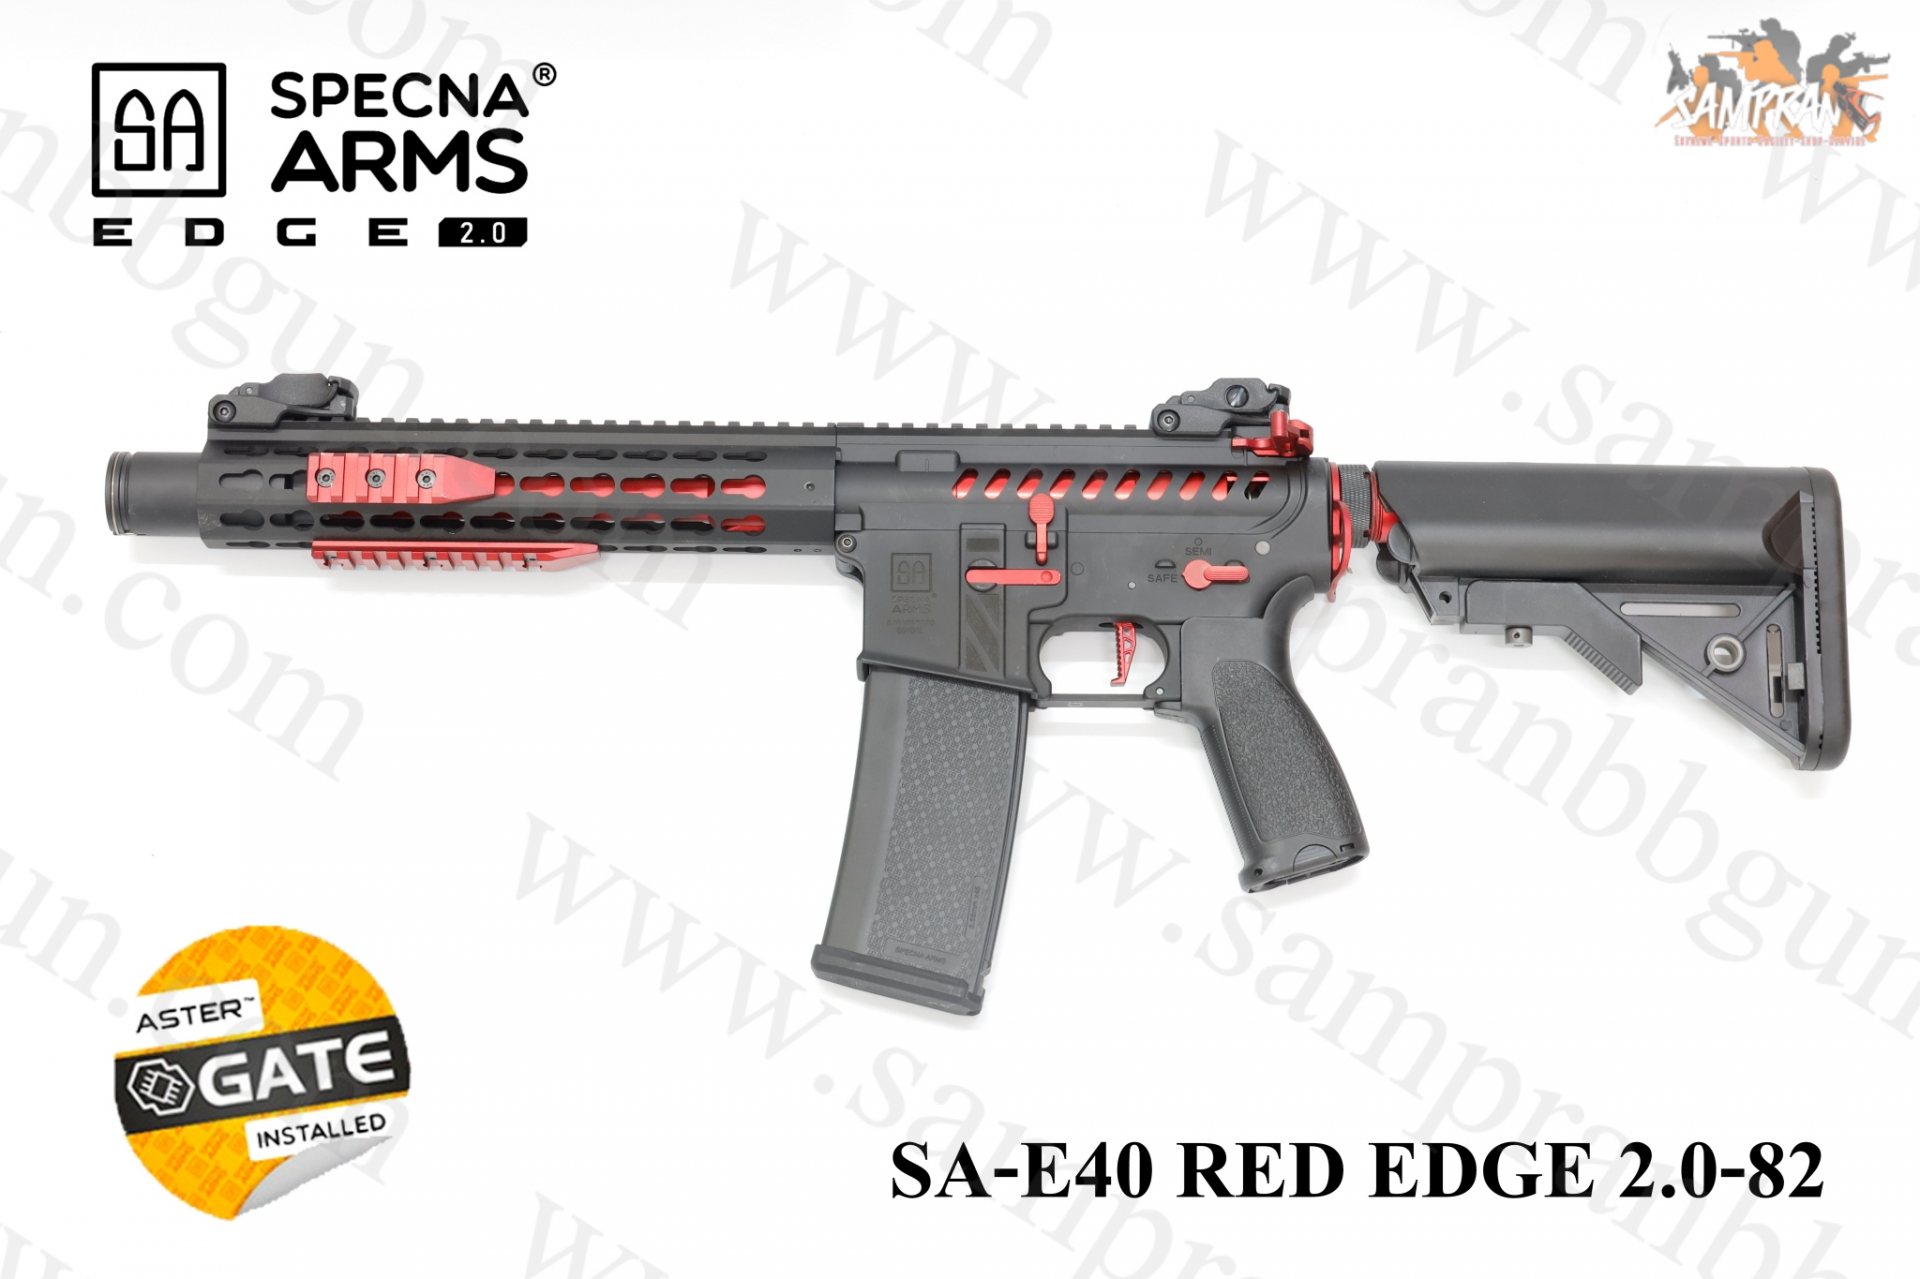 Specna Arms SA-E40 RED EDGE 2.0 M4 Red Edition (มาพร้อมระบบ GATE ASTER)